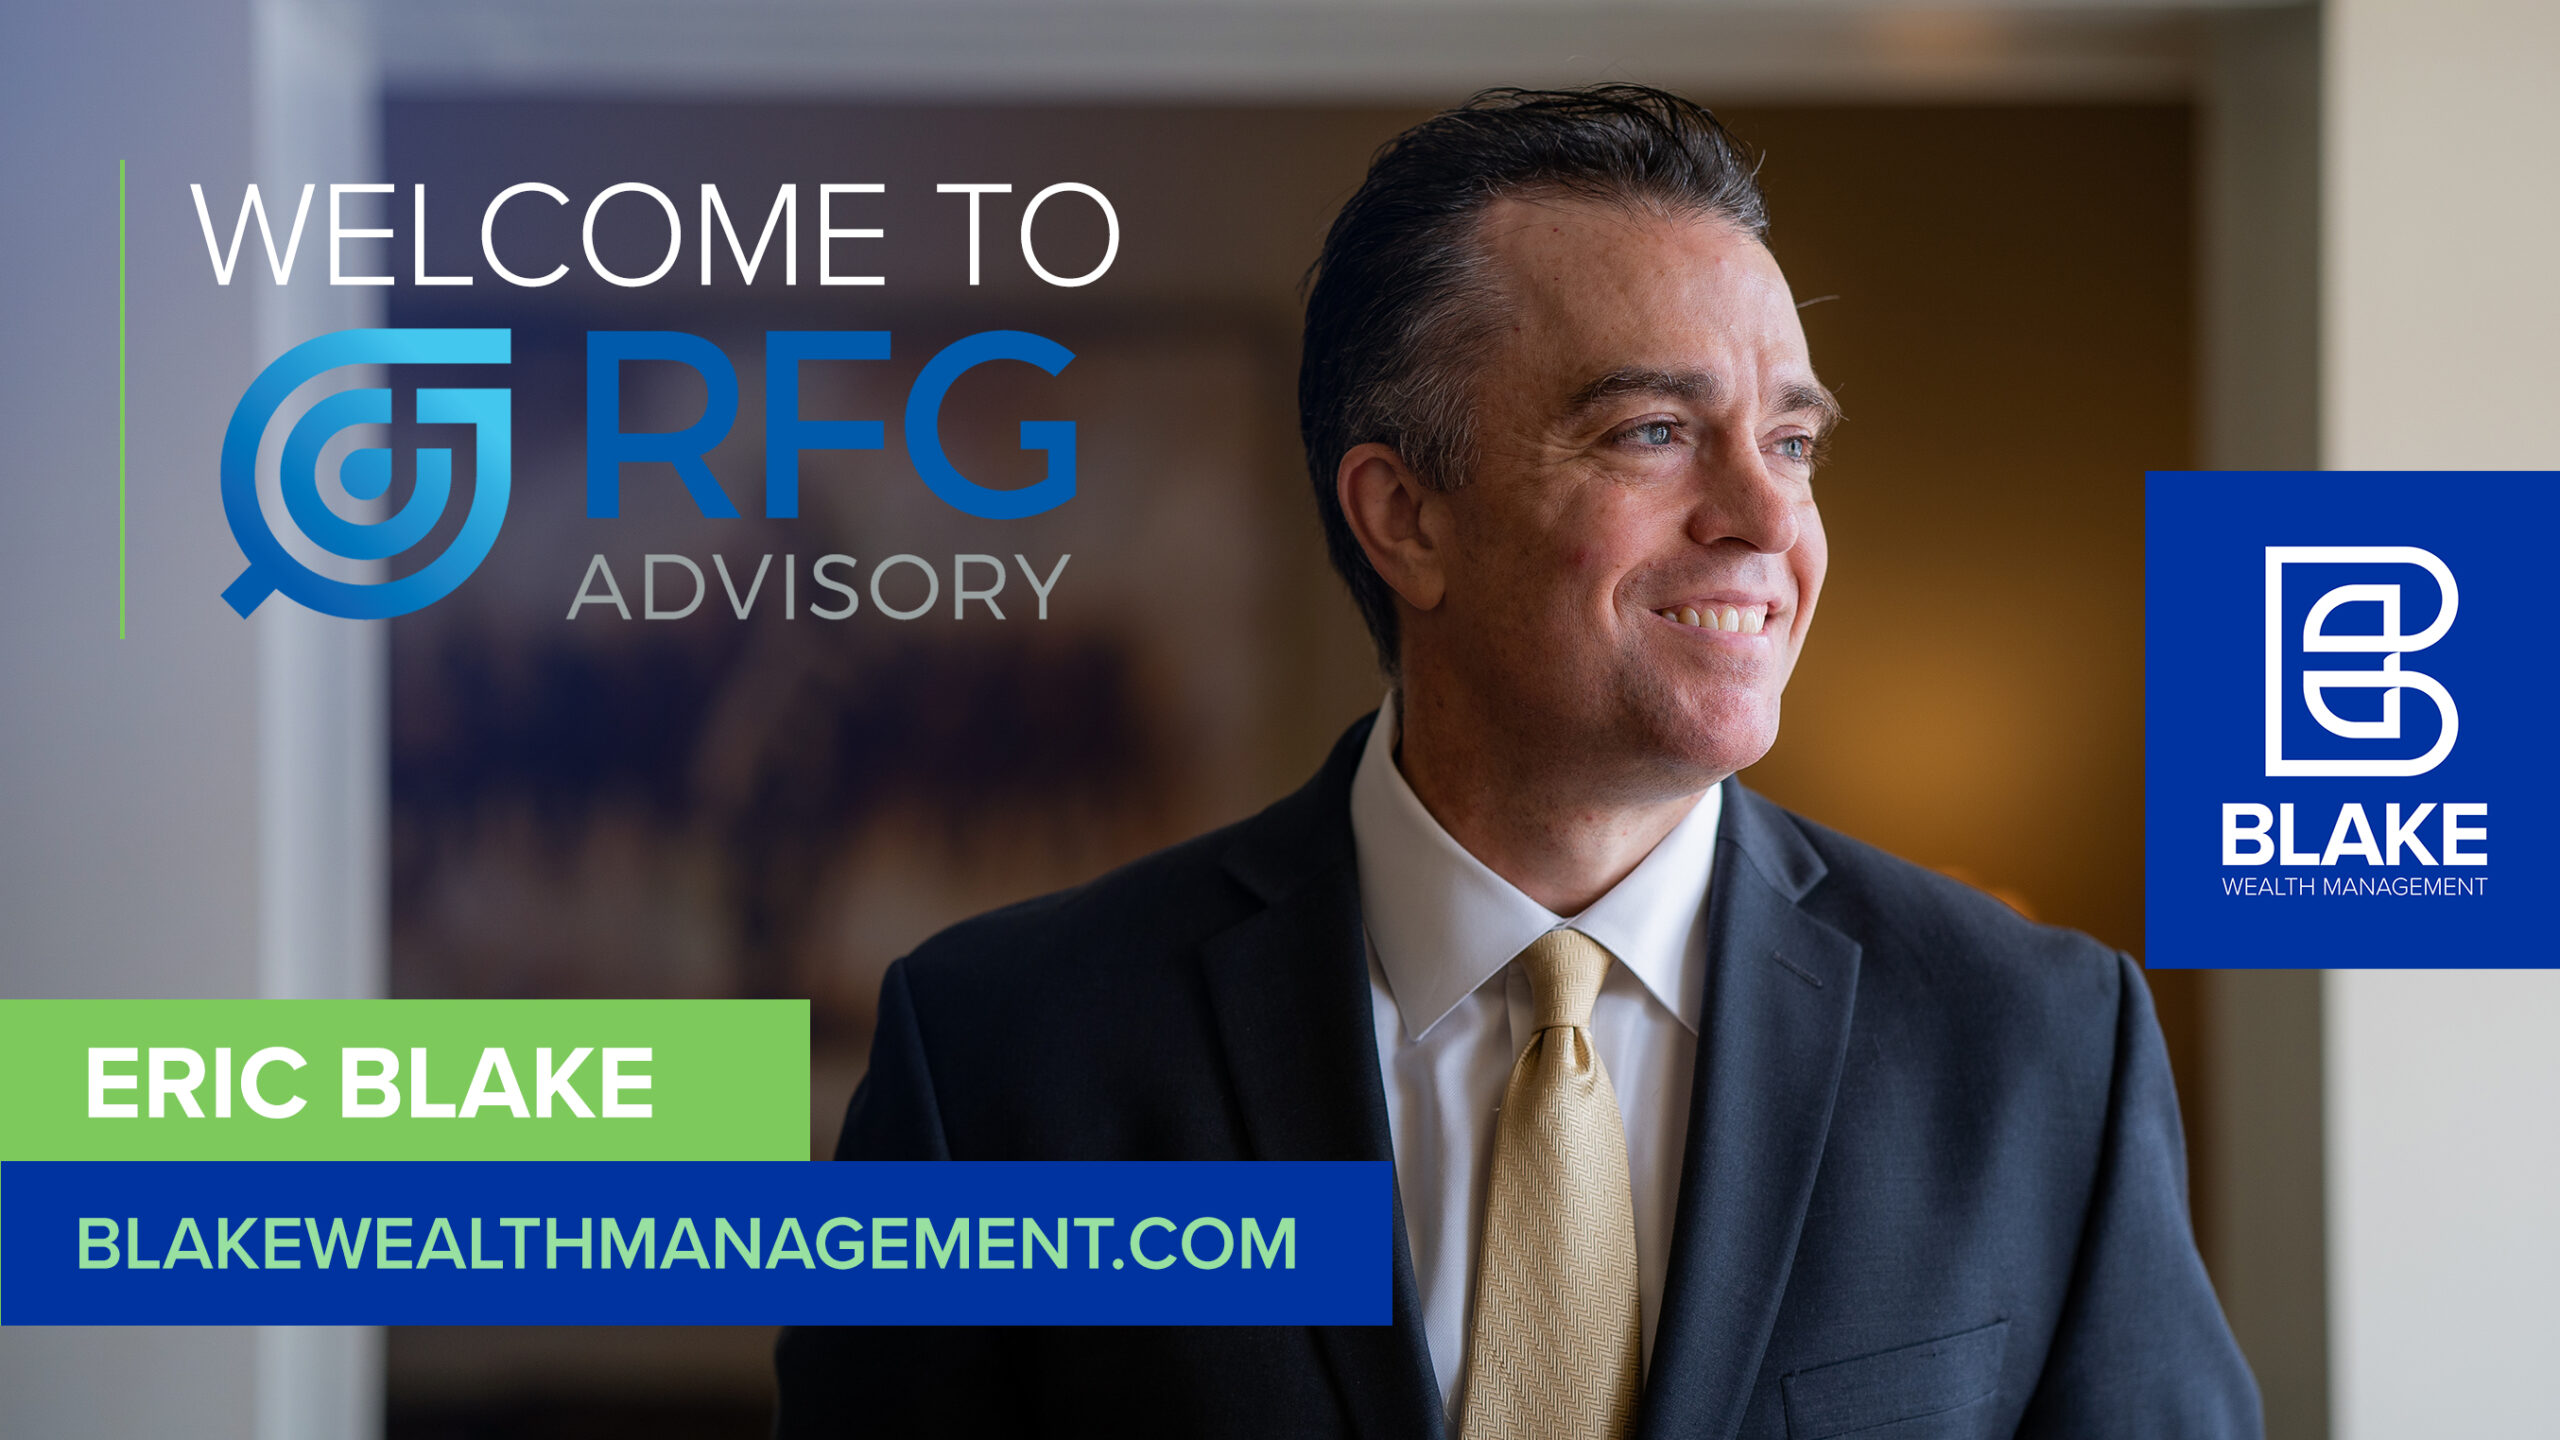 Eric Blake, founder of Blake Wealth Management, has chosen RFG Advisory 